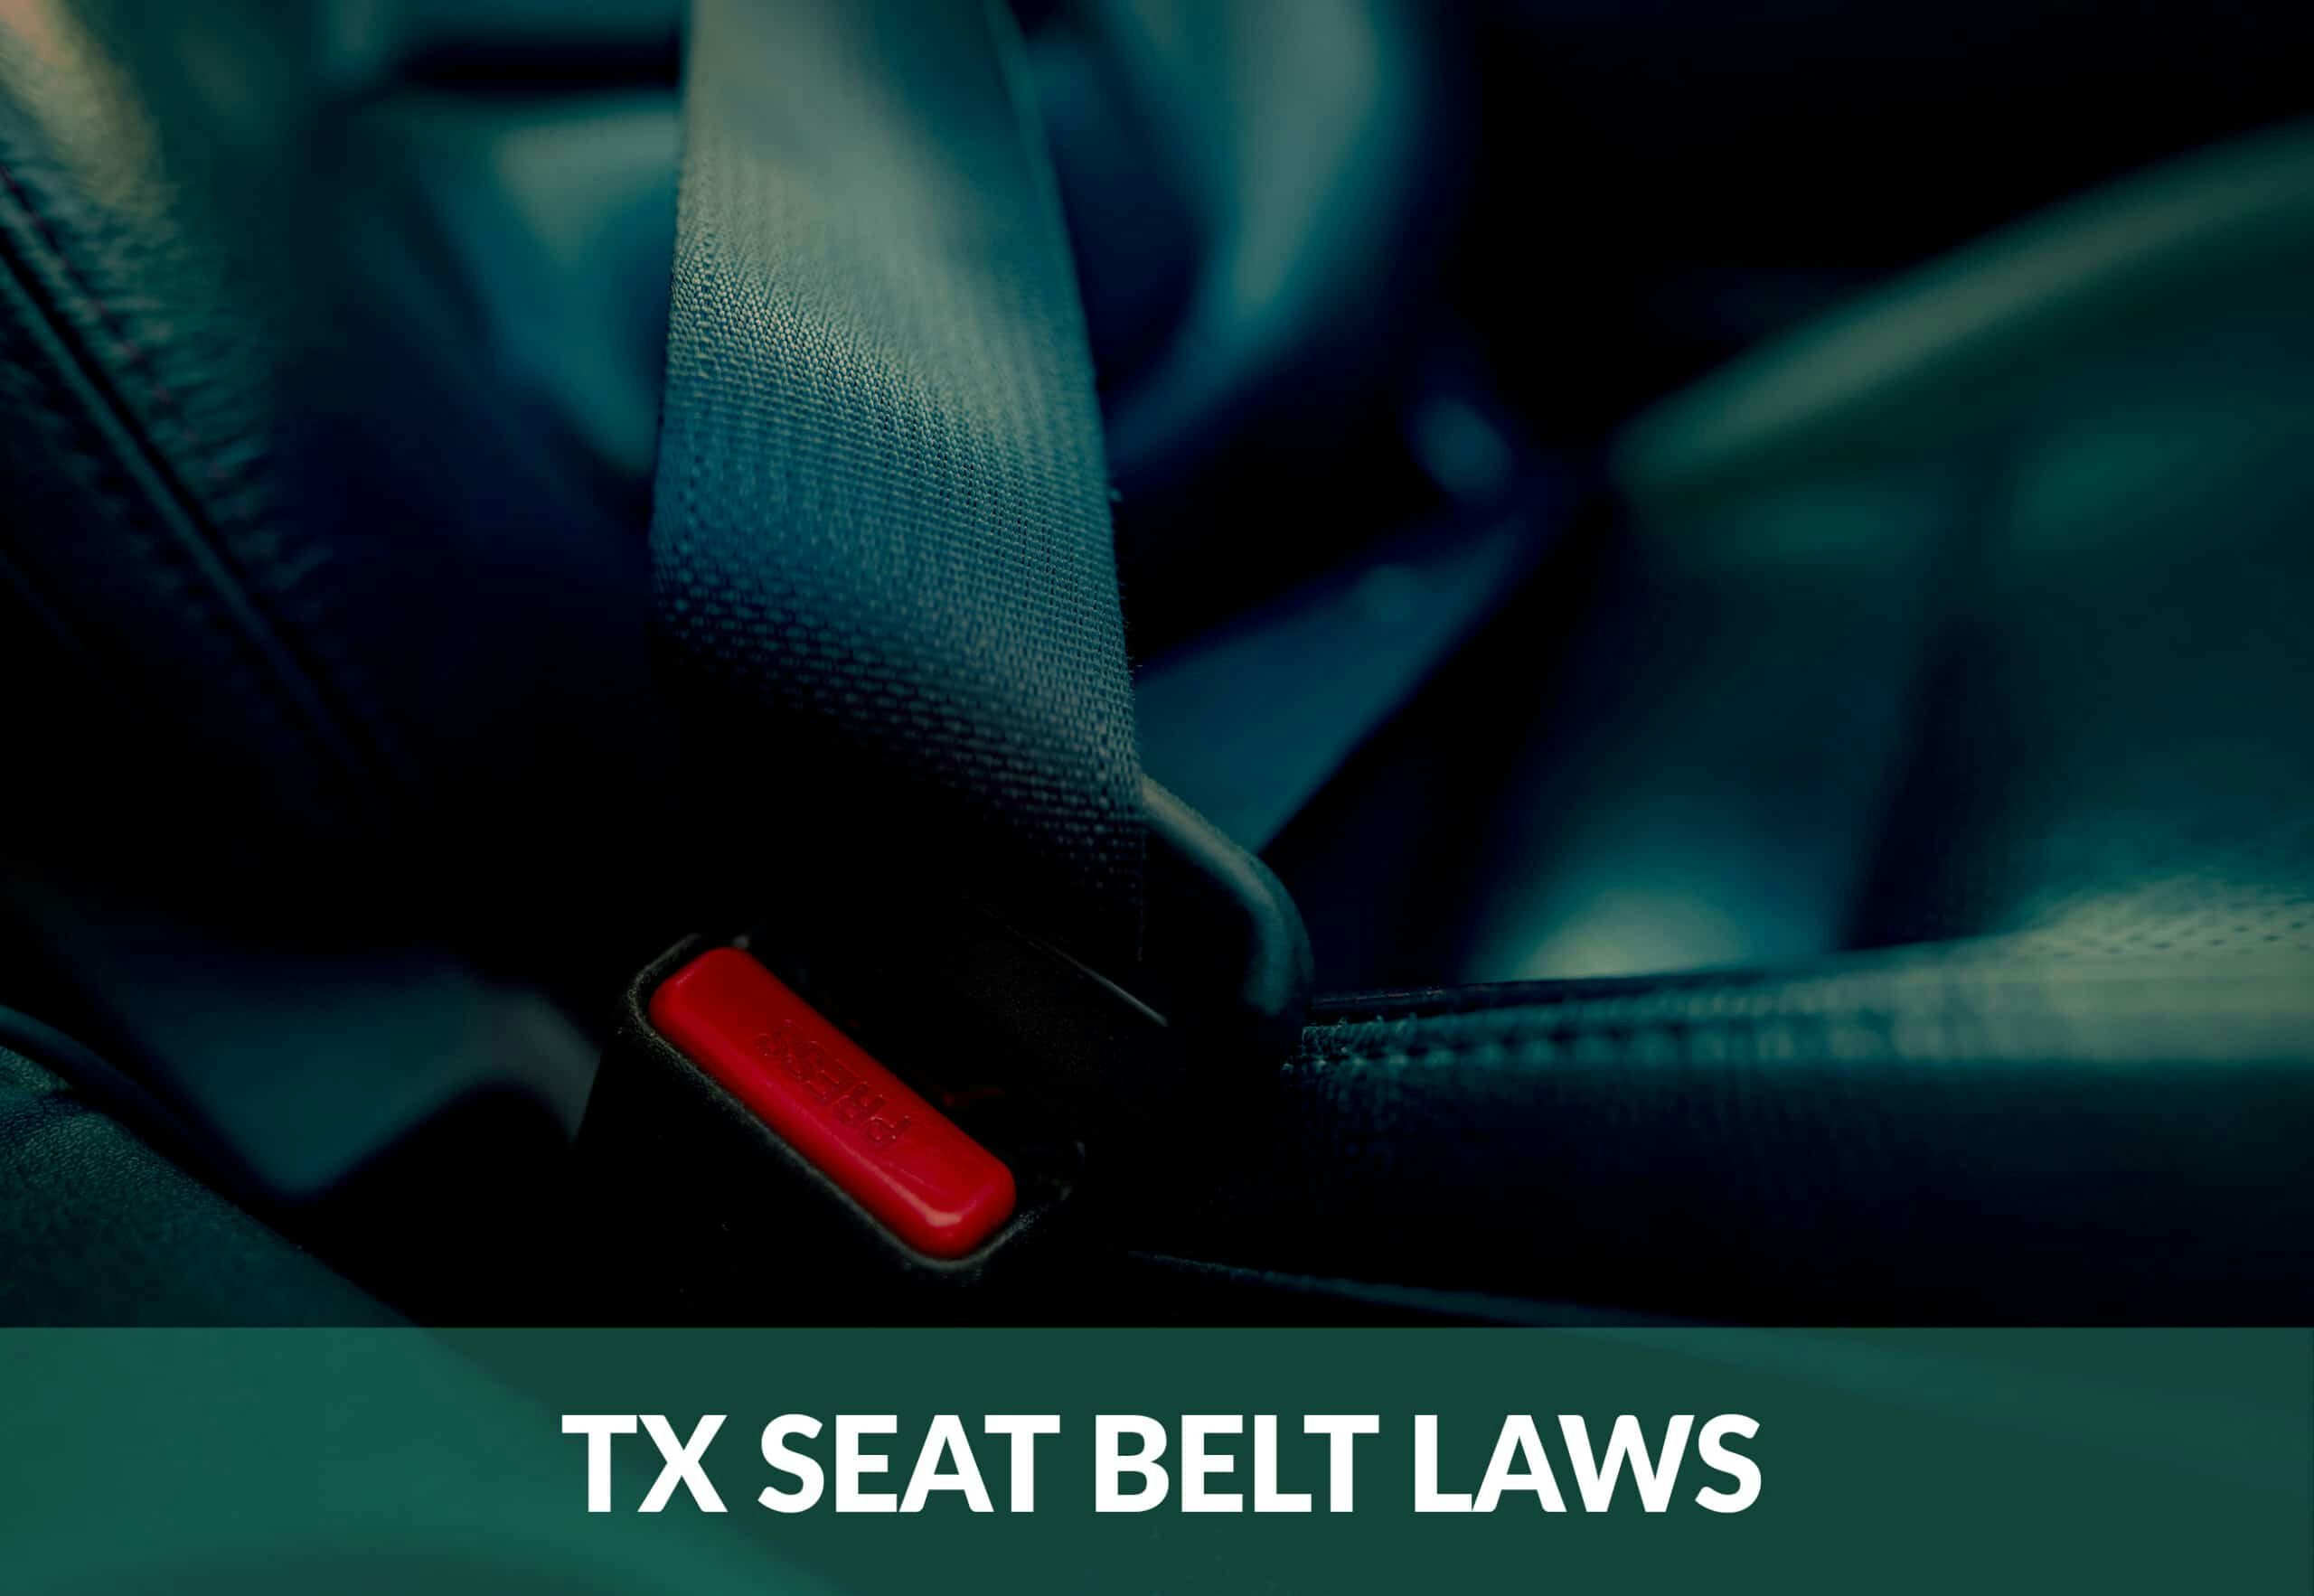 Texas seat belt laws